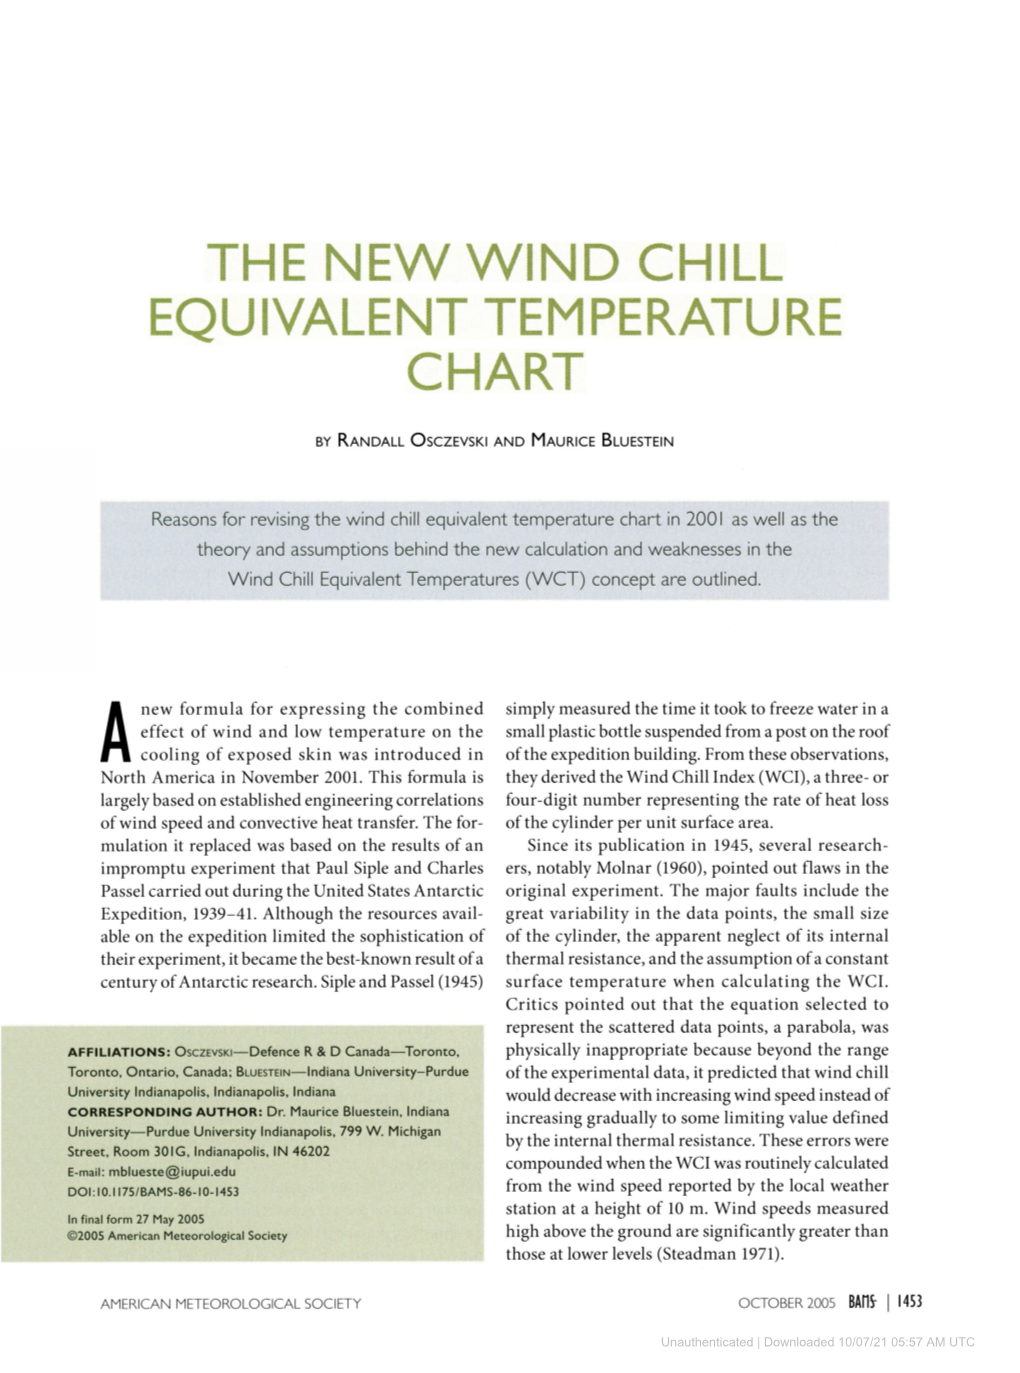 The New Wind Chill Equivalent Temperature Chart